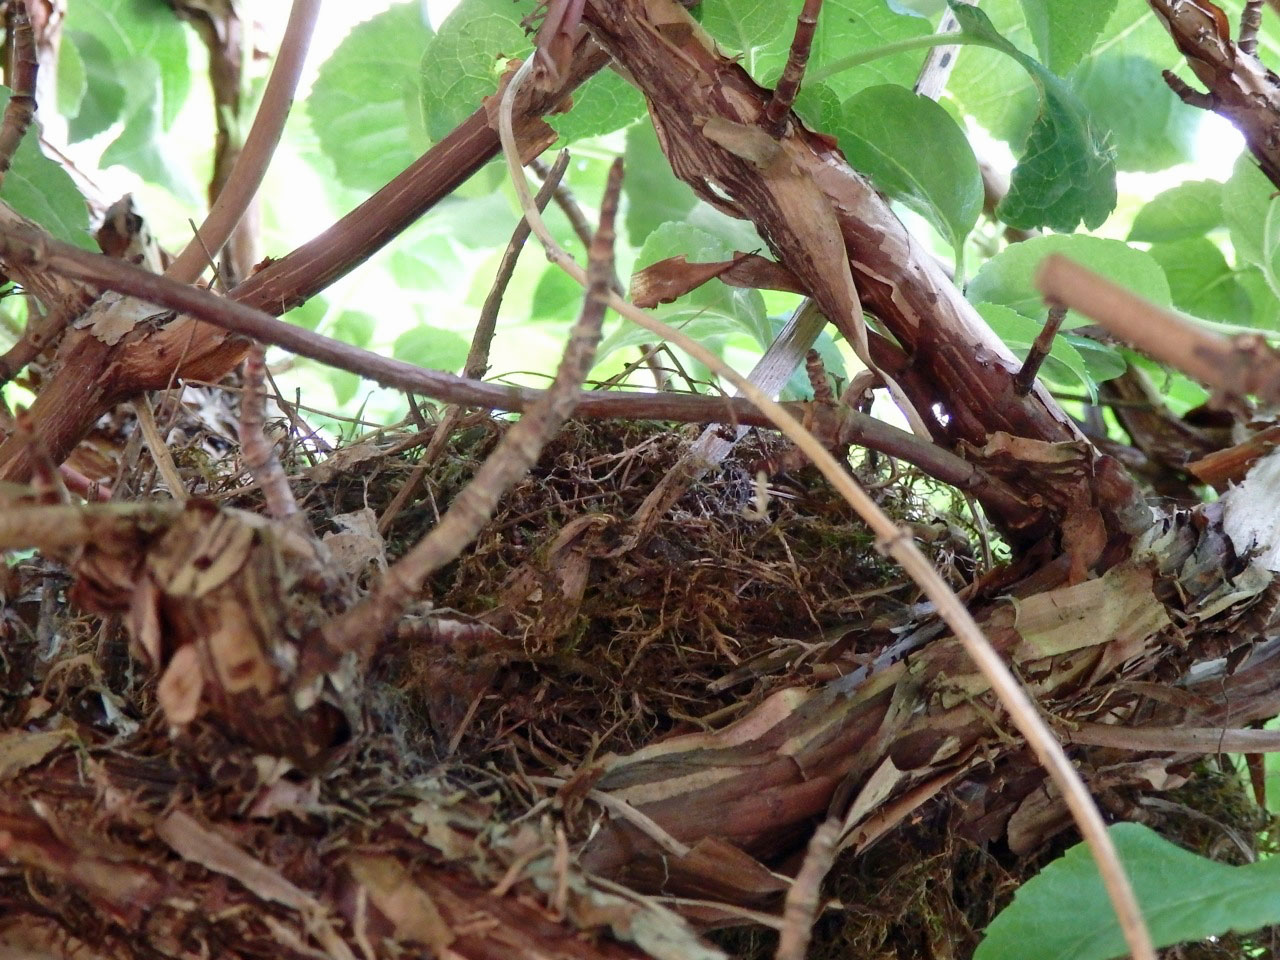 Blackbird nest